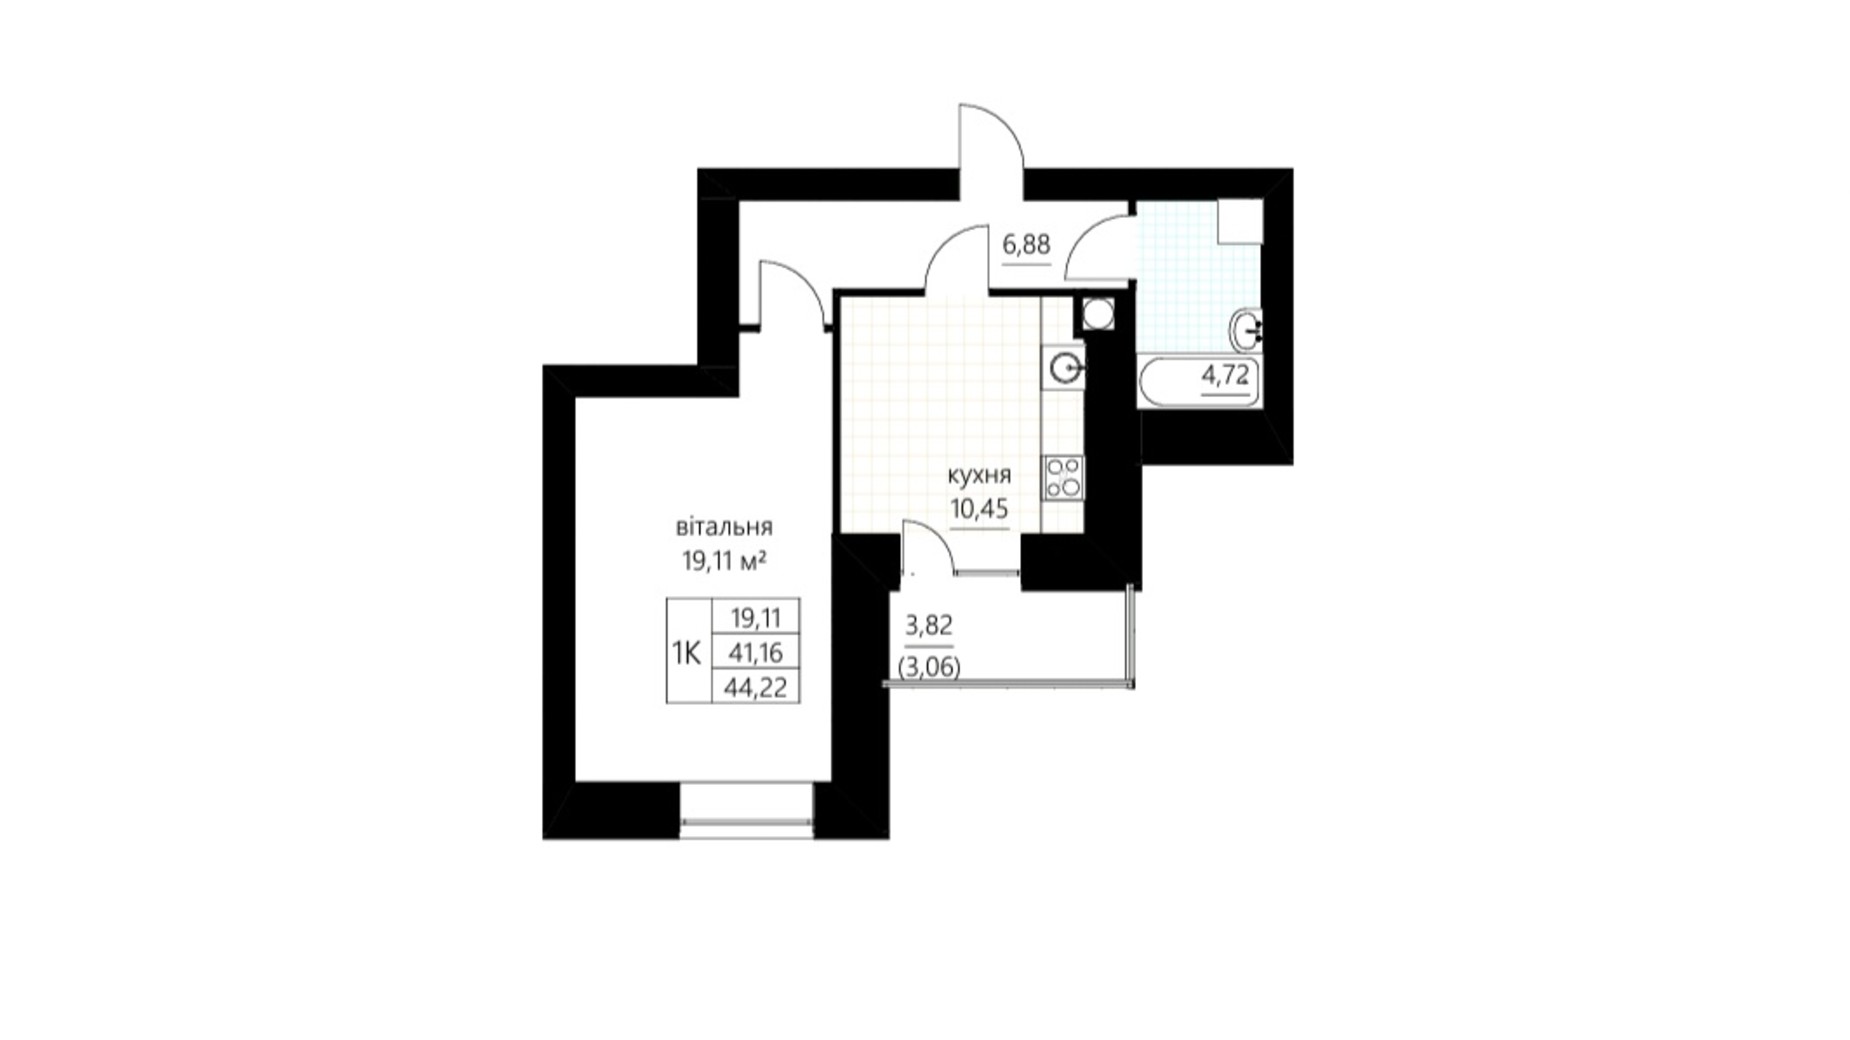 Планировка 1-комнатной квартиры в ЖК Сливен-21 44.22 м², фото 674839